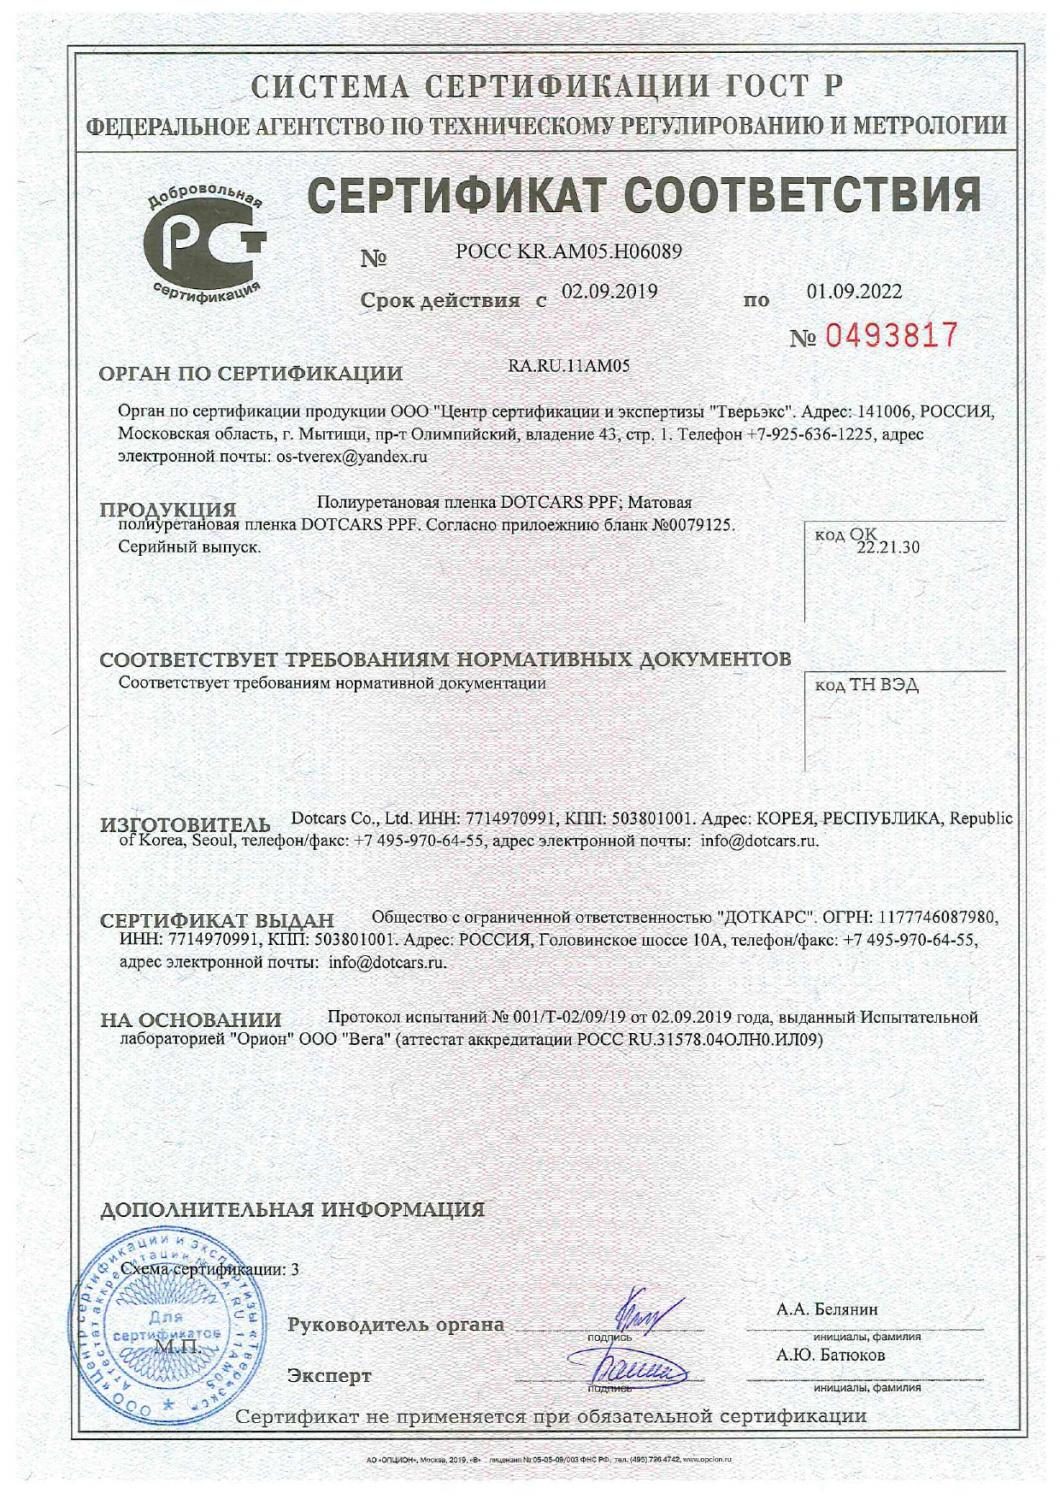 Сертификат на пленку марки DOTCARS